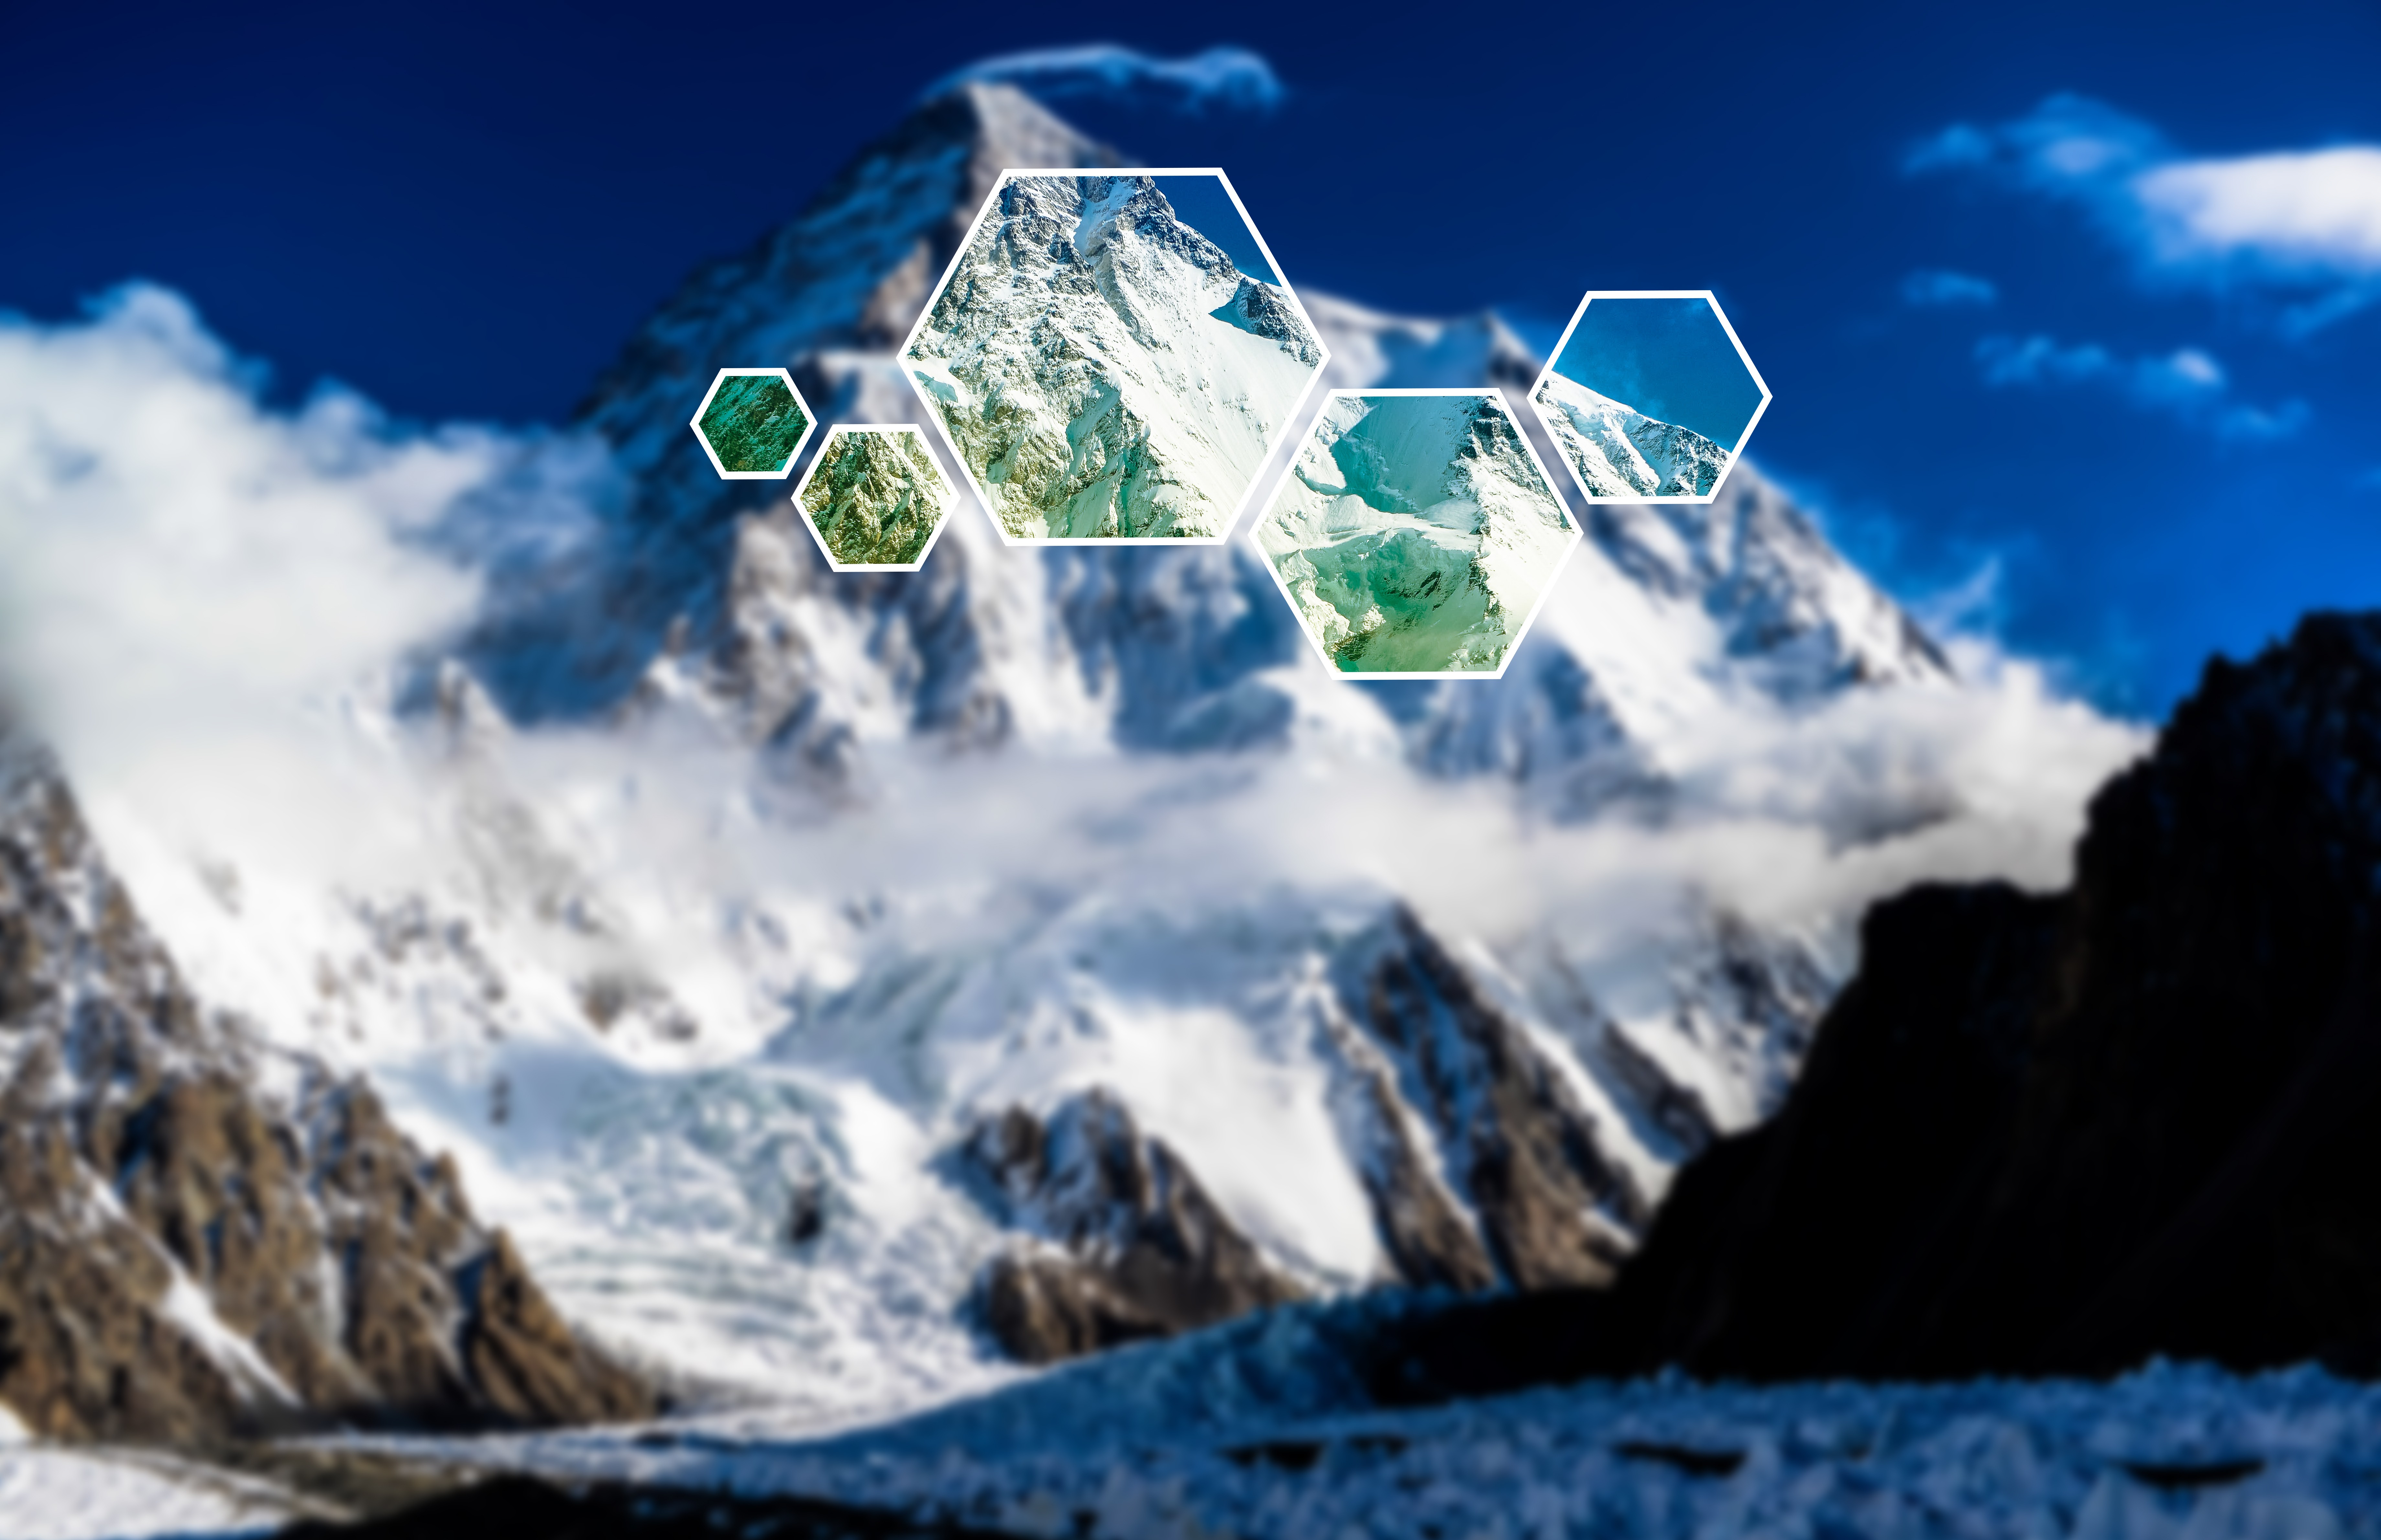 General 7360x4760 mountains hexagon blurred digital art snowy peak nature geometric figures